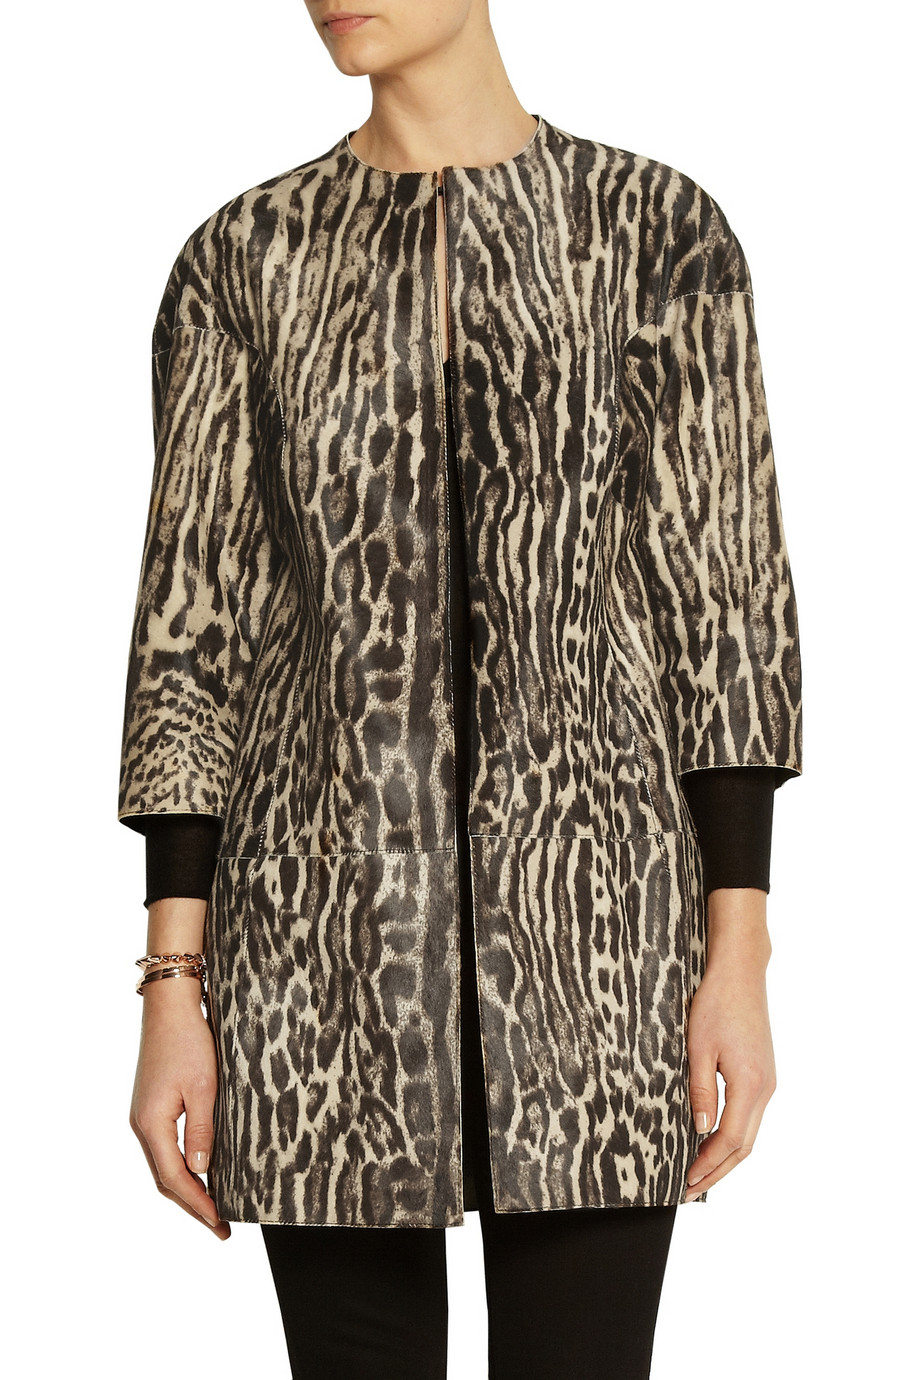 Valentino Leopard-Print Calf Hair Coat - Lyst